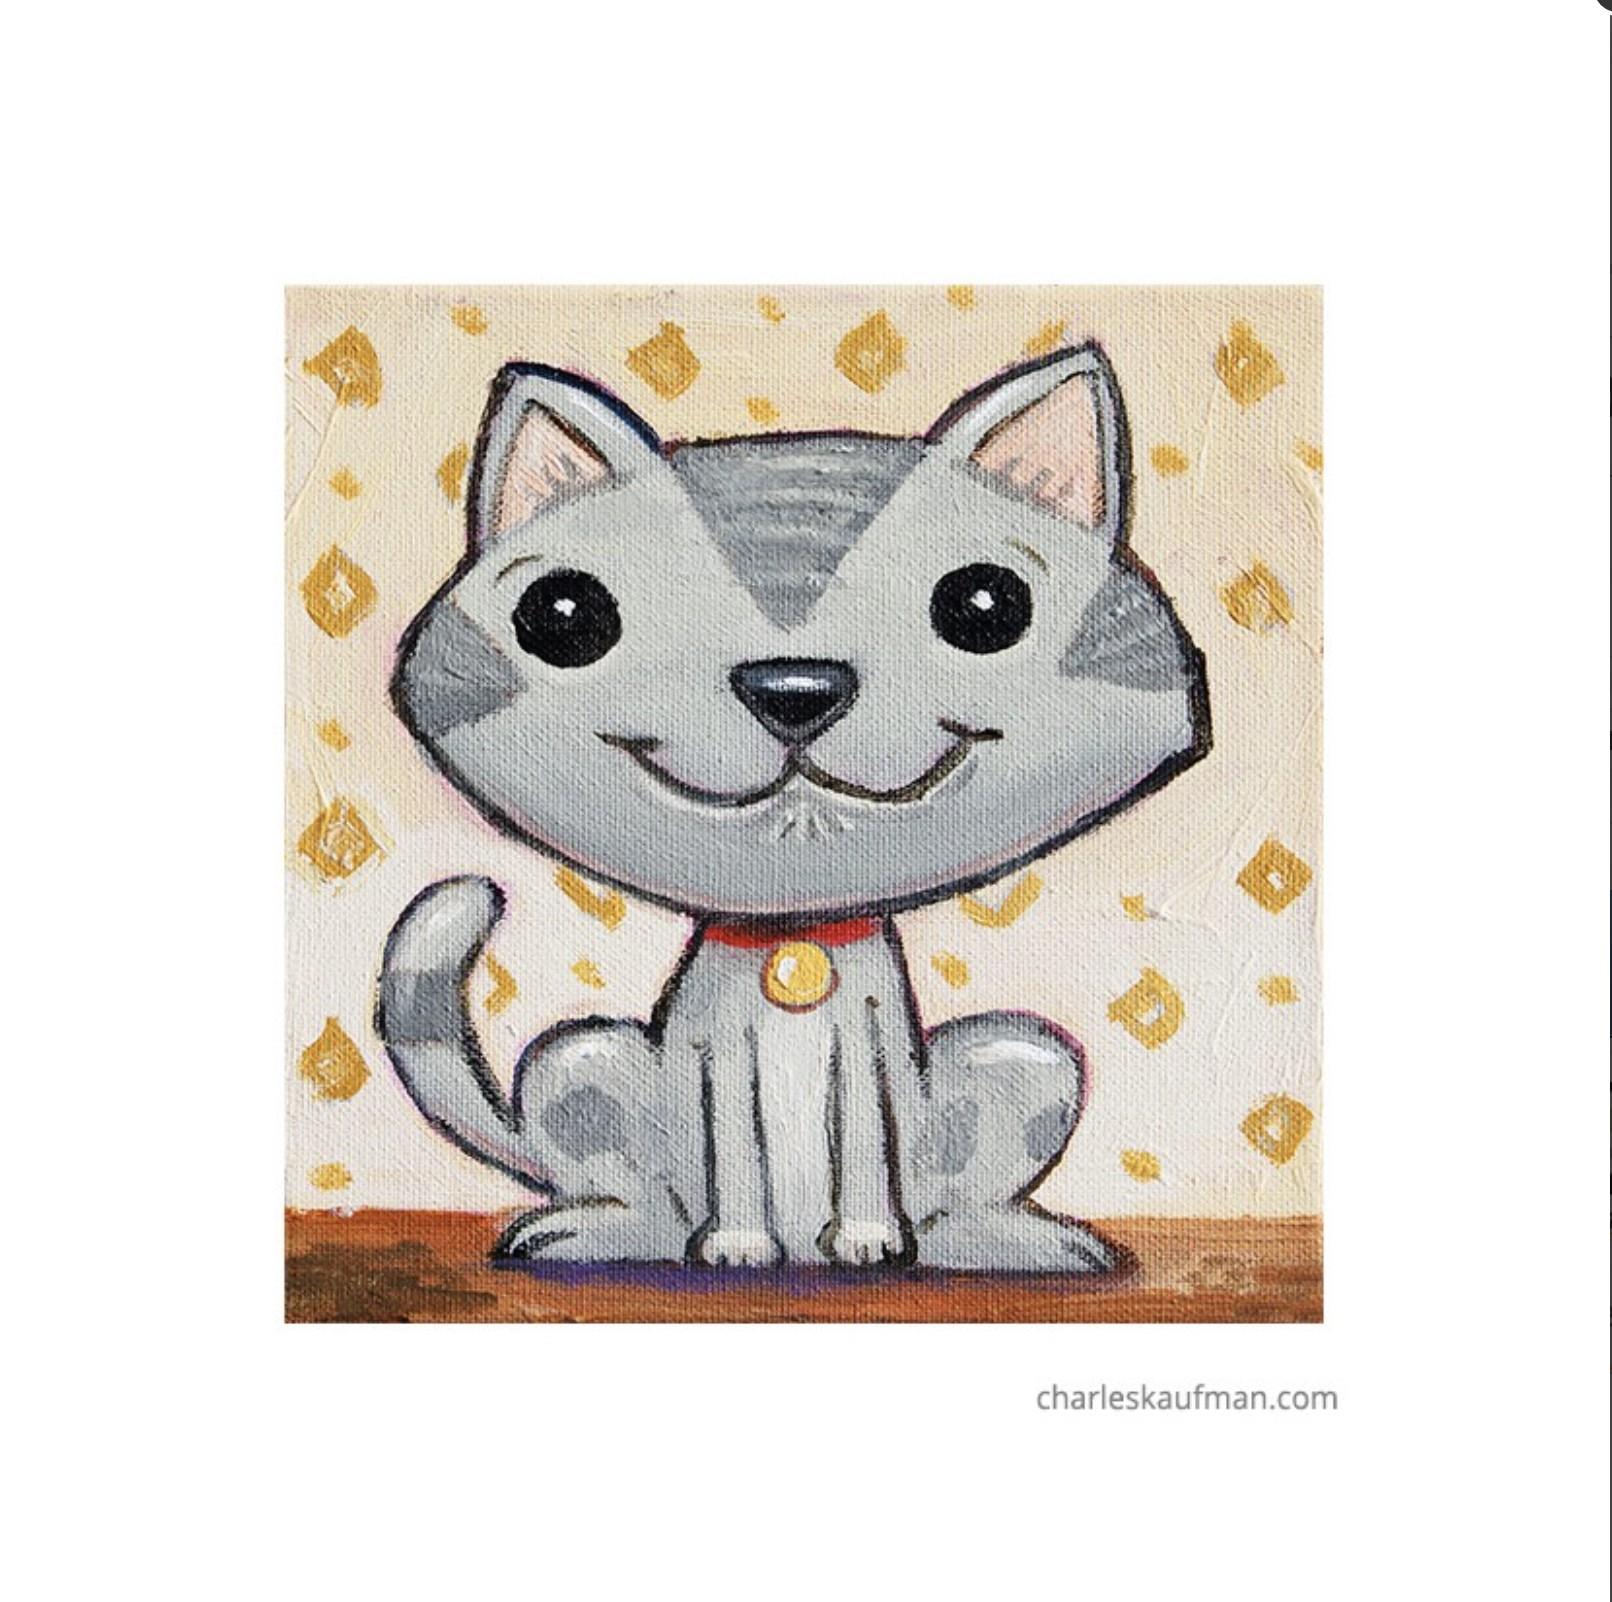 Smiling Grey Cat - Kaufman, Charles - k-CHK424